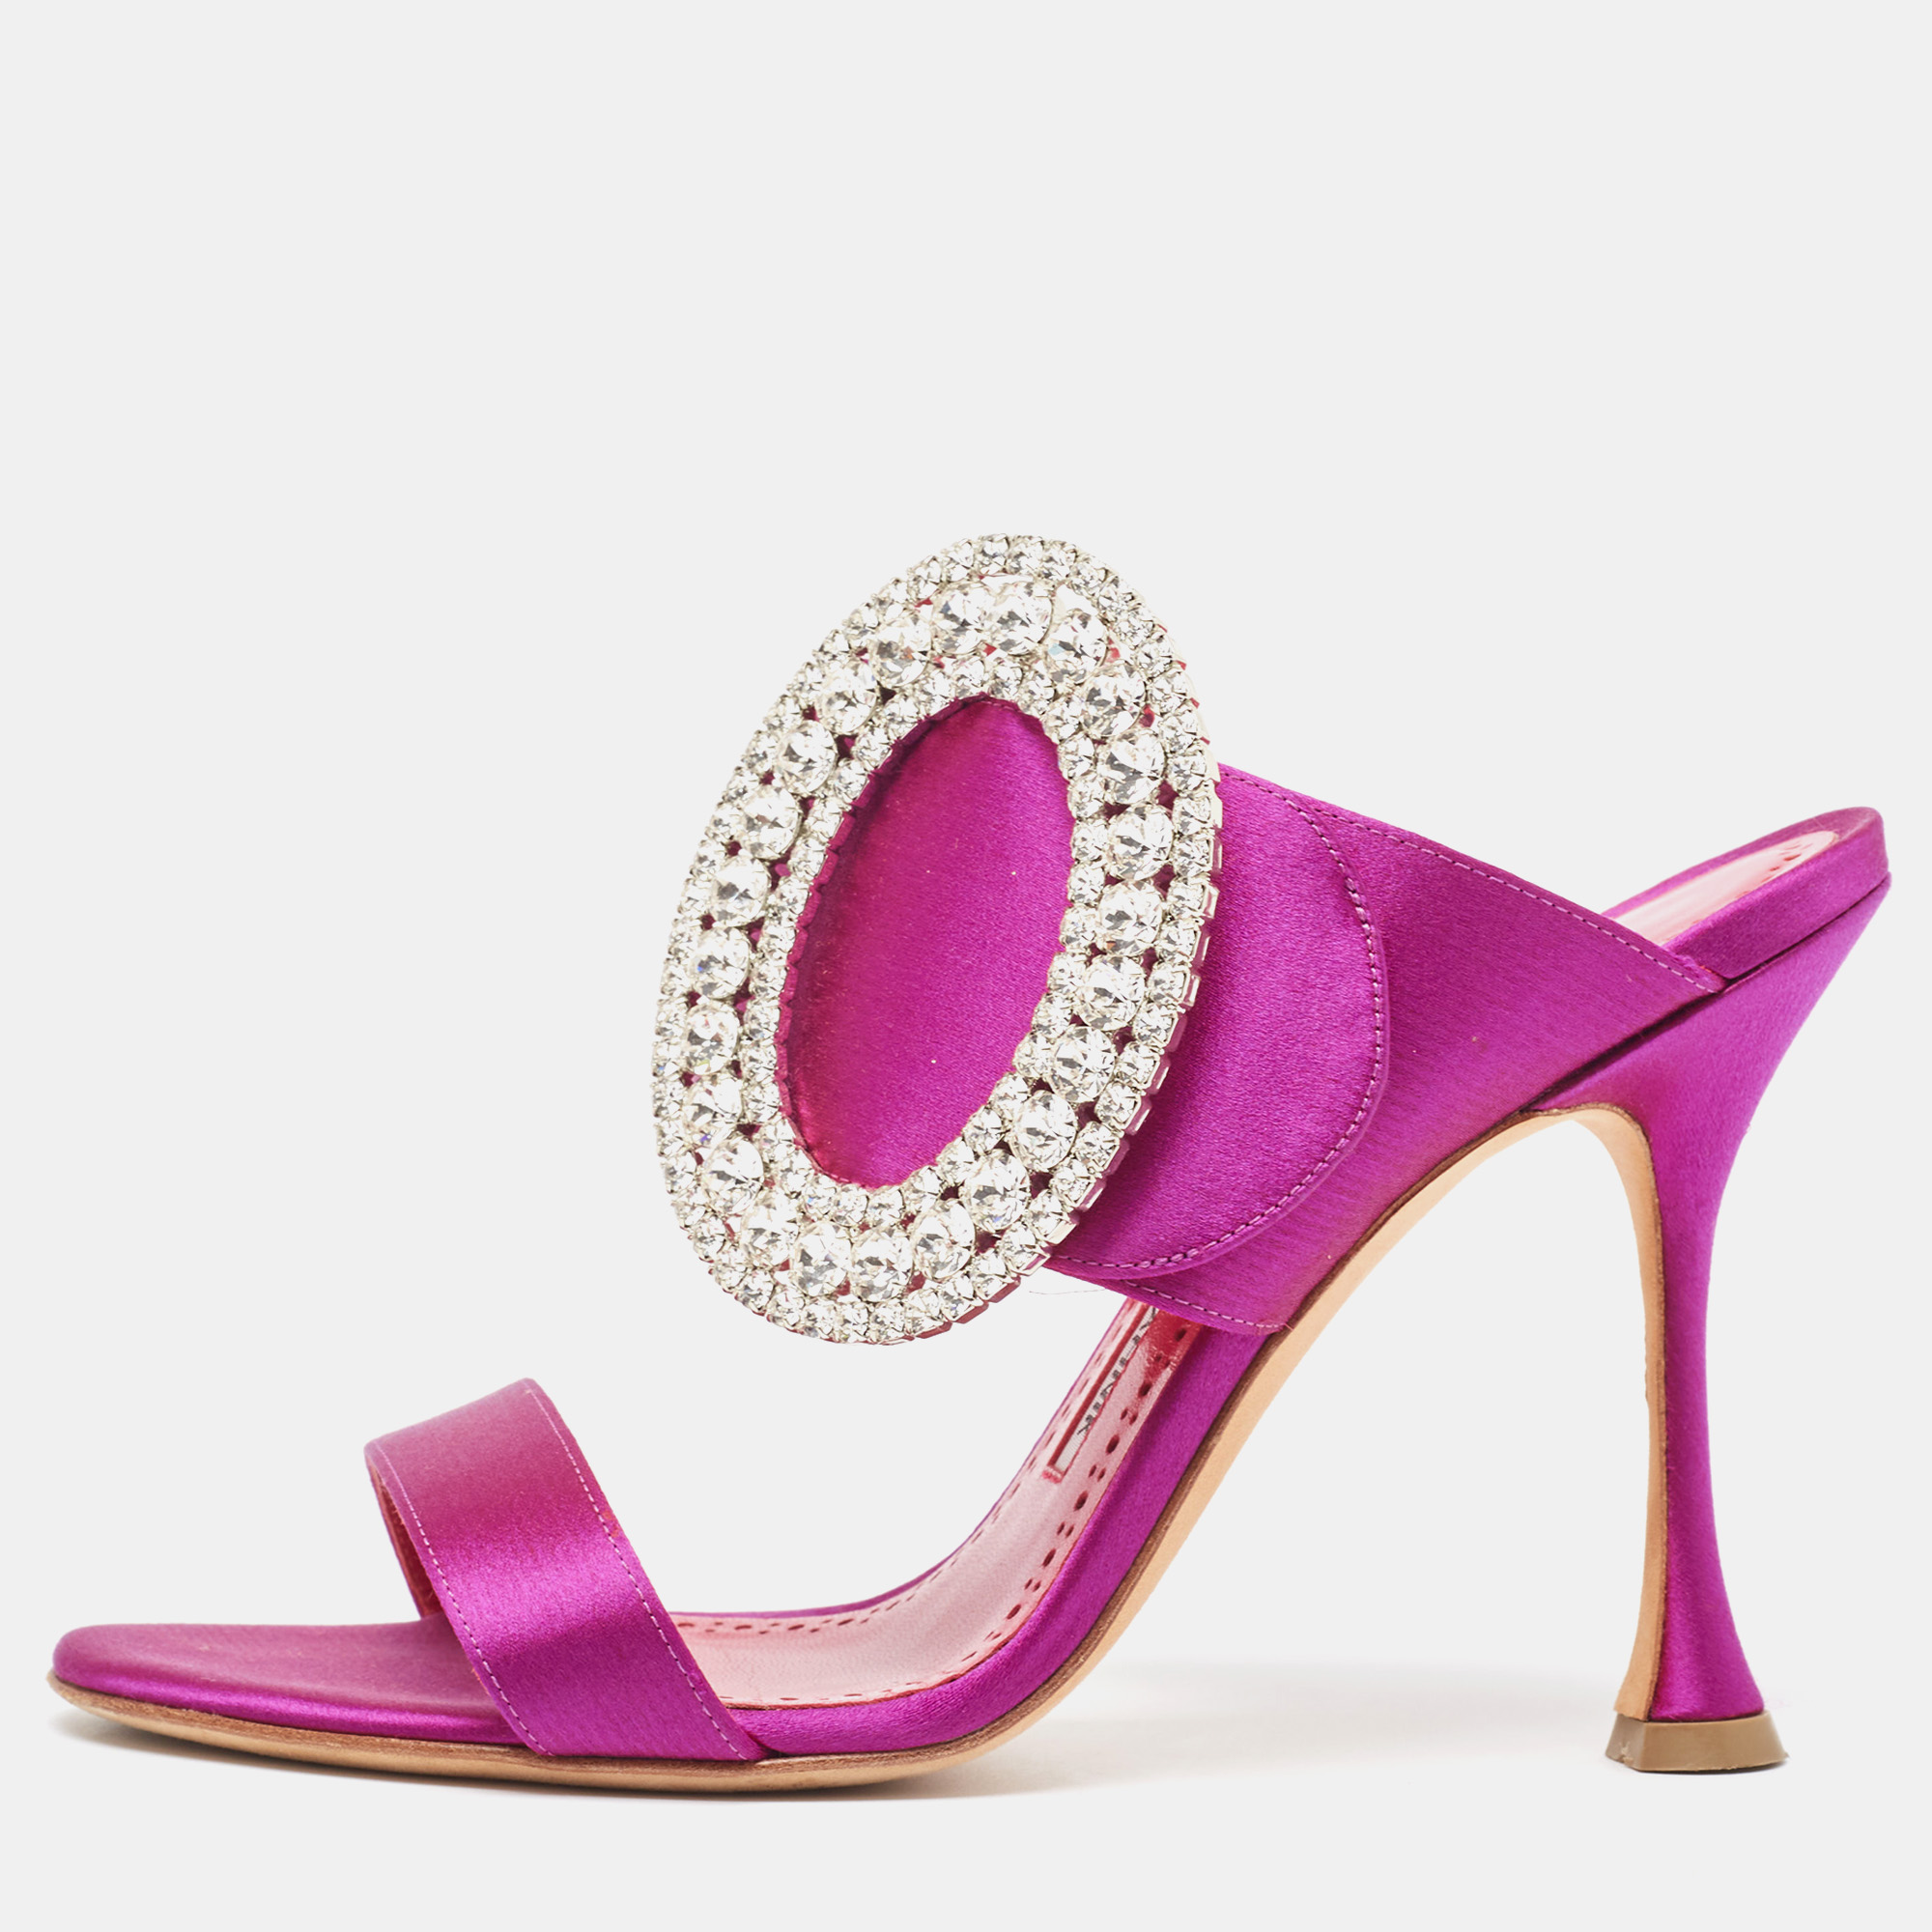 Manolo blahnik purple satin fibiona slide sandals size 36.5